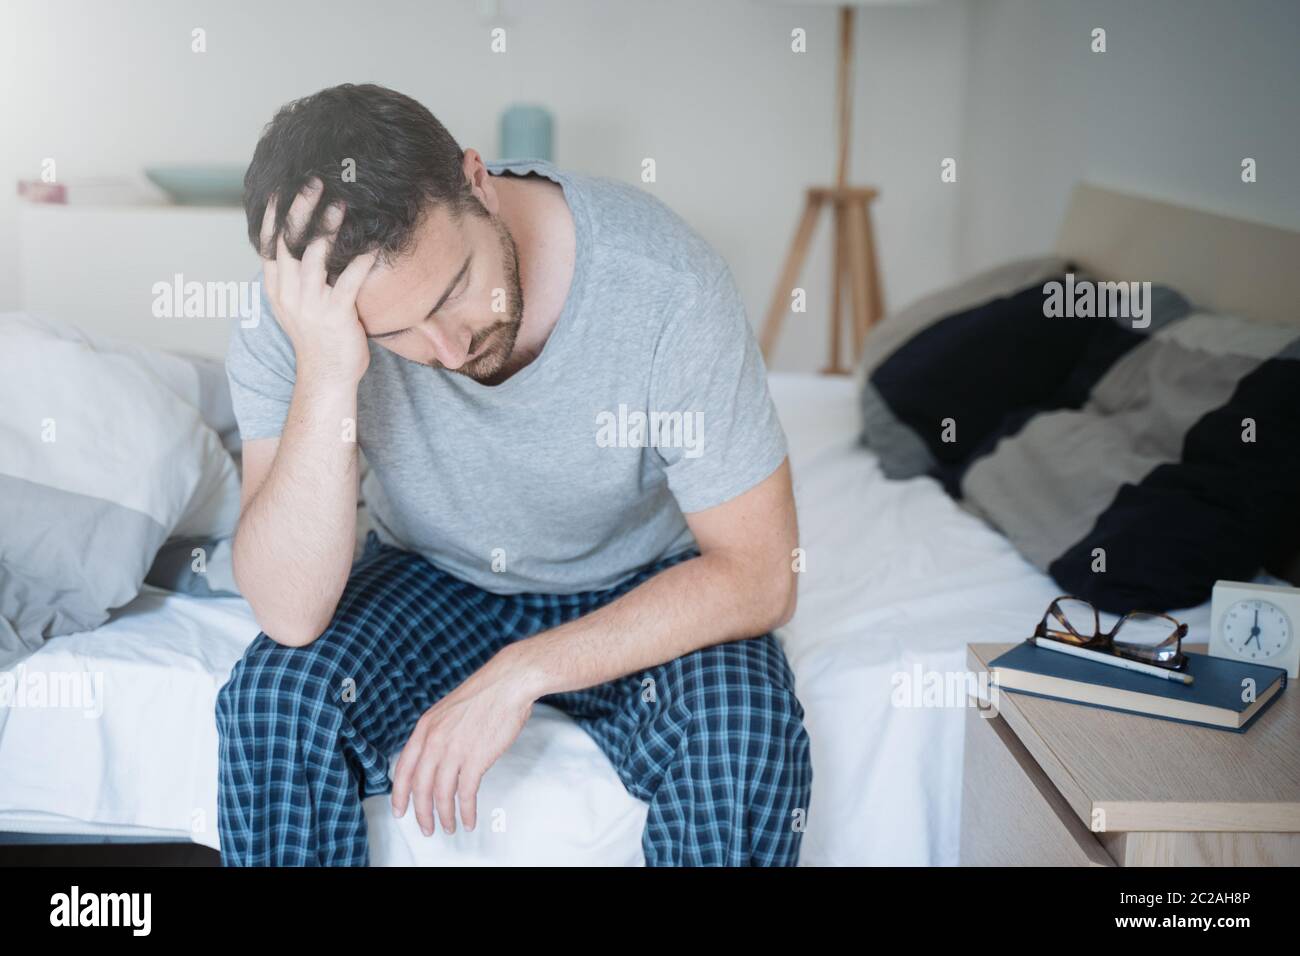 Man with sleeping problem wake up feeling tiredness Stock Photo